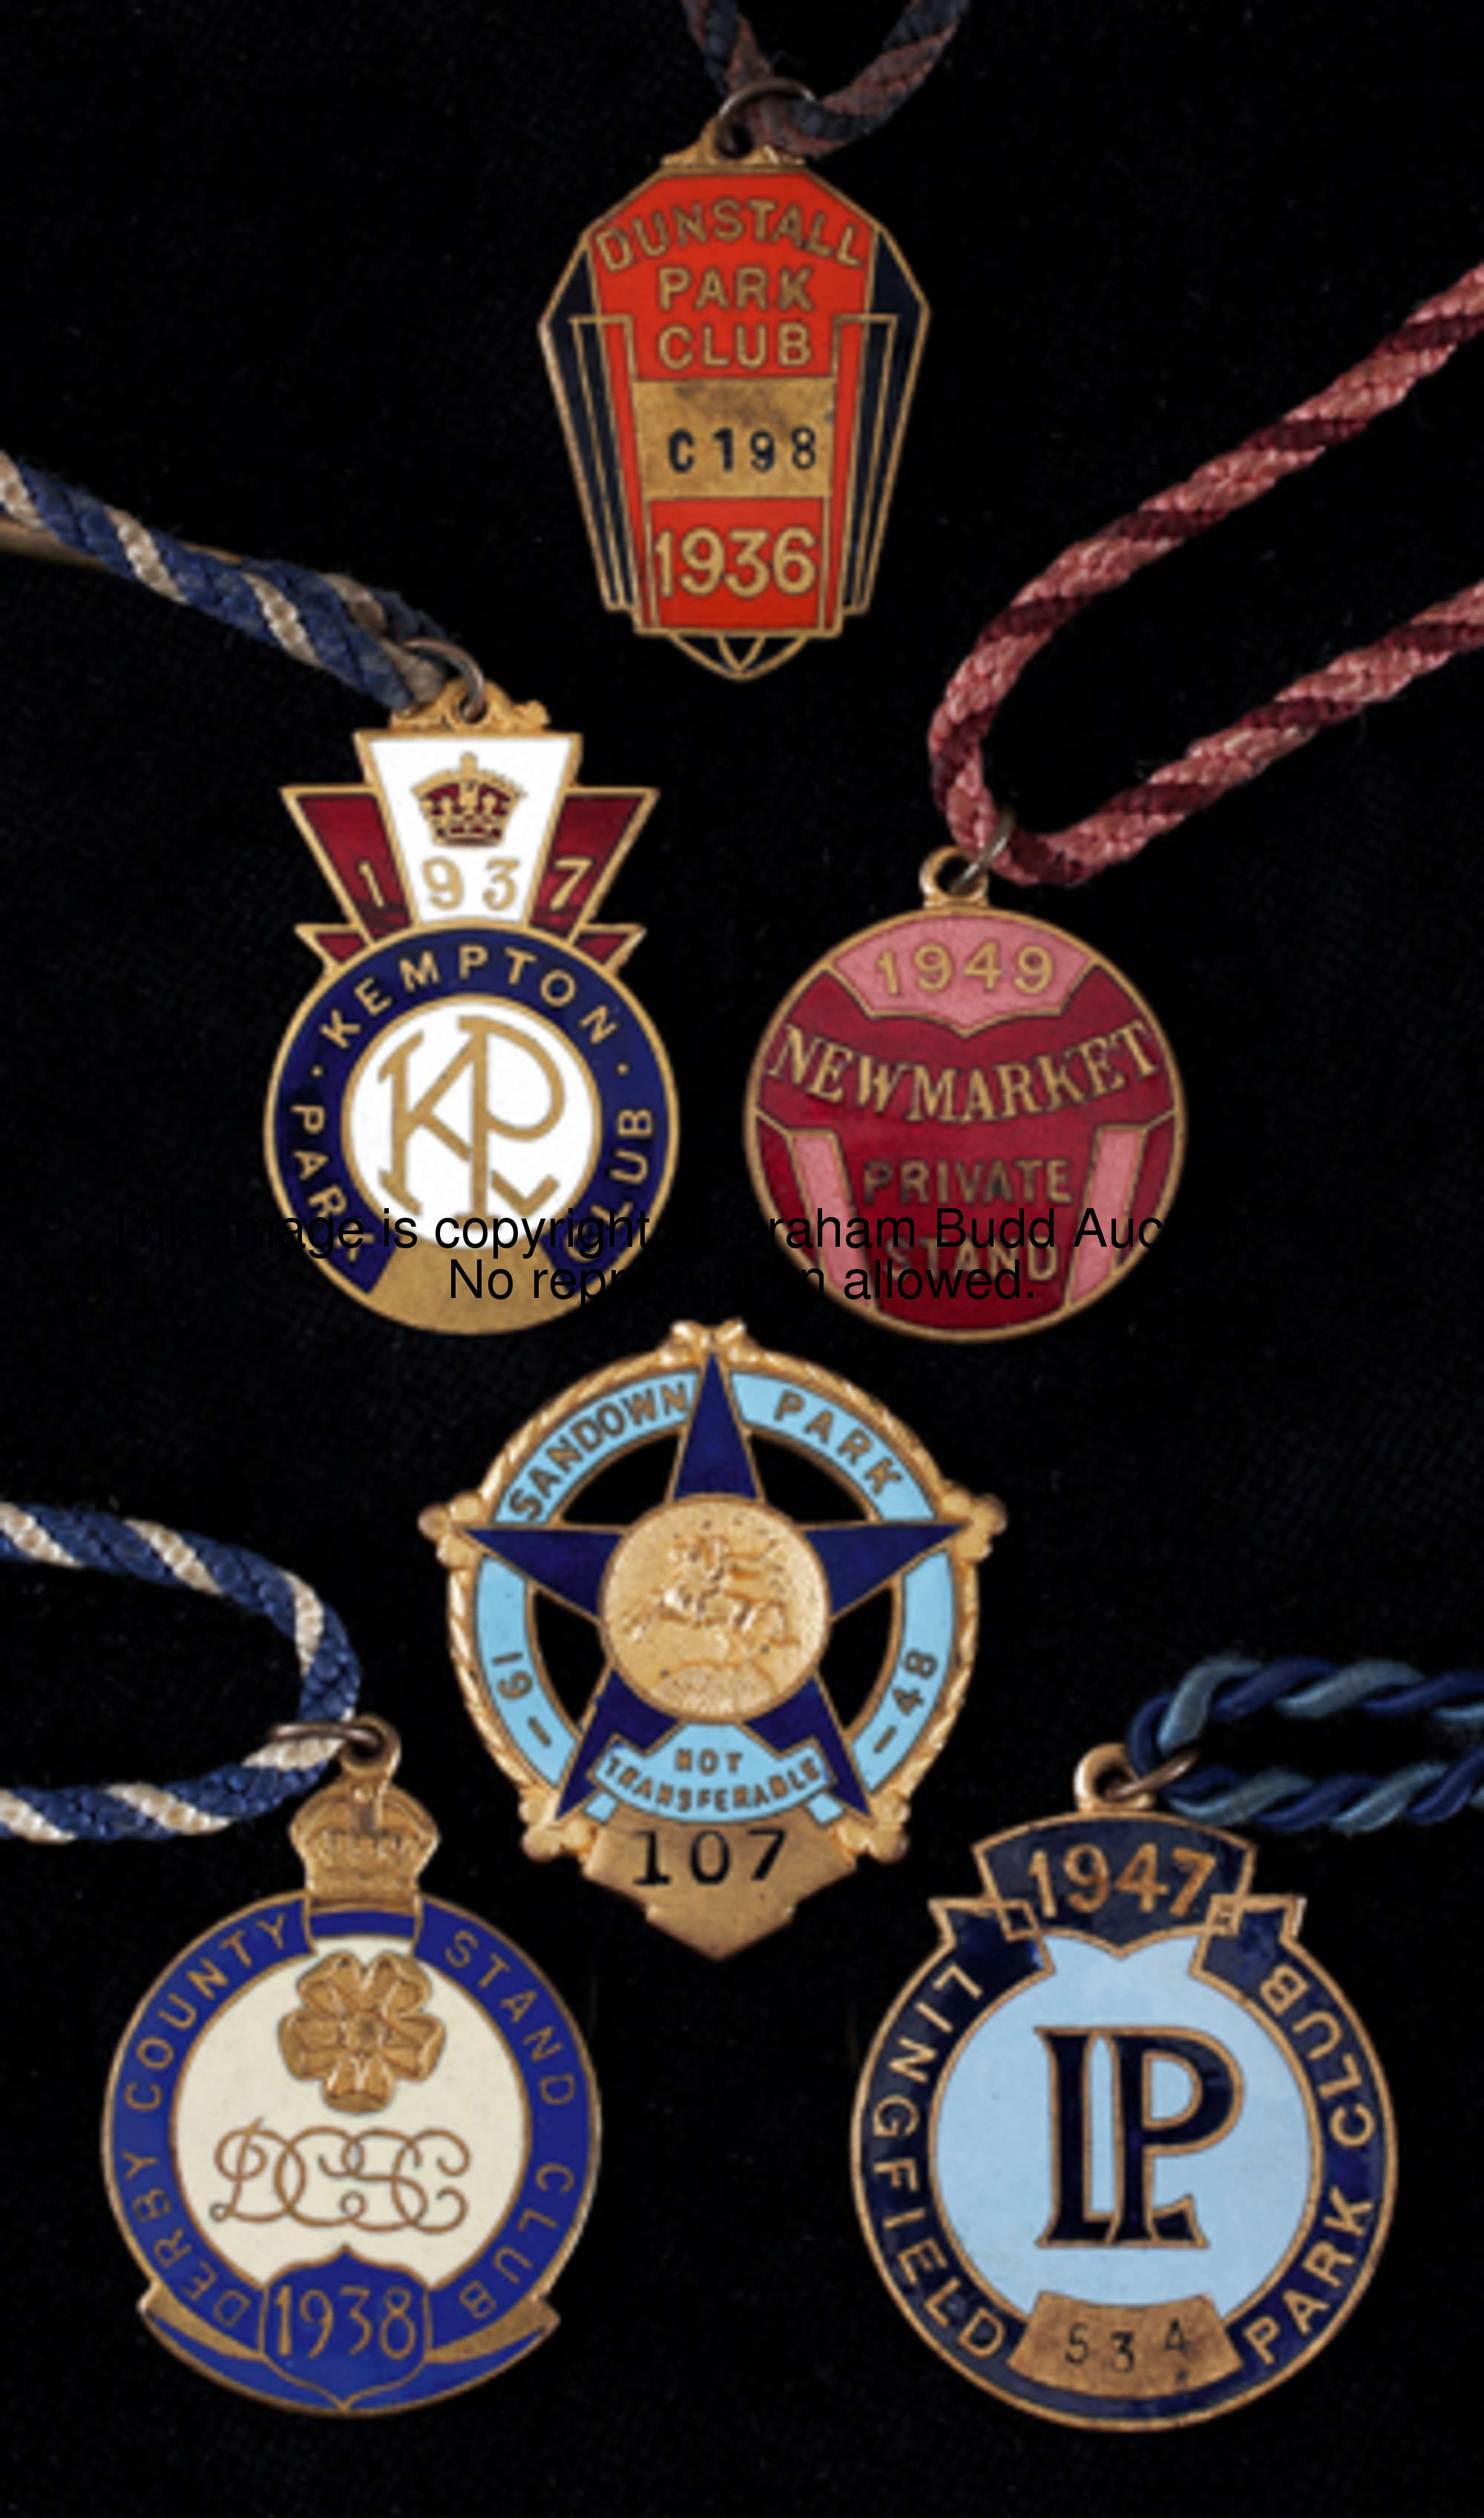 Six gilt-metal & enamel race badges, Derry County Stand Club 1938, Dunstall Park Club 1936, Kempton ...